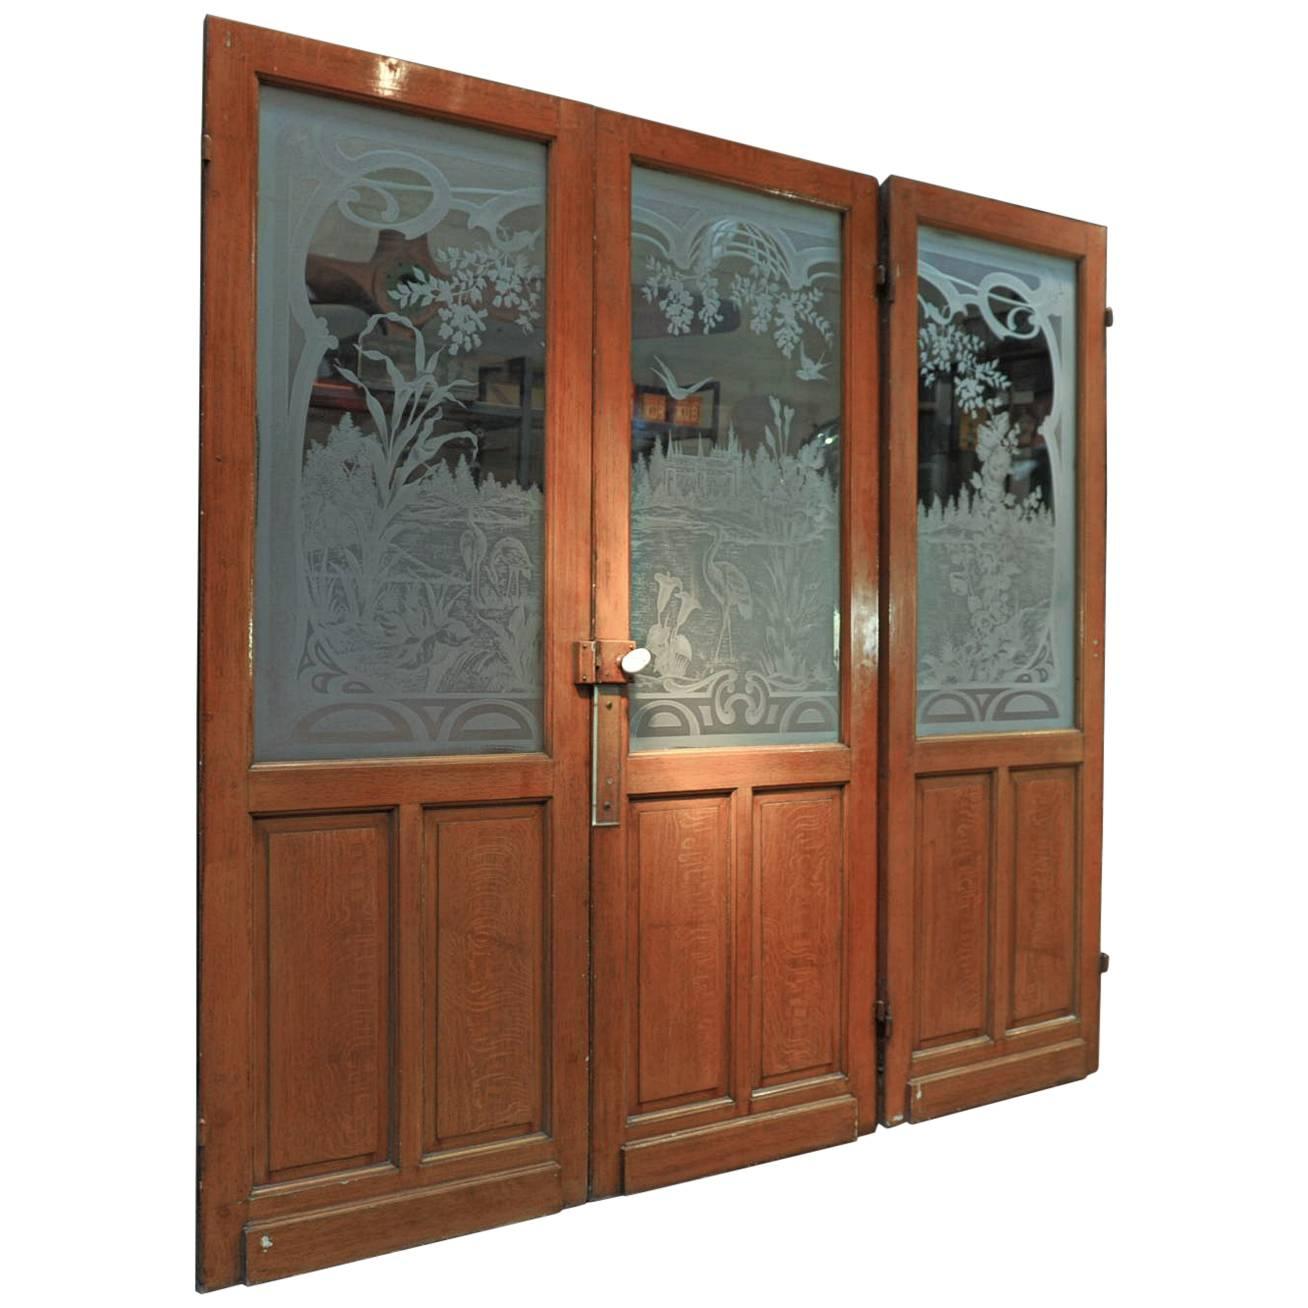 Set of Three French Art Nouveau Craved Glass Inside Doors, circa 1900